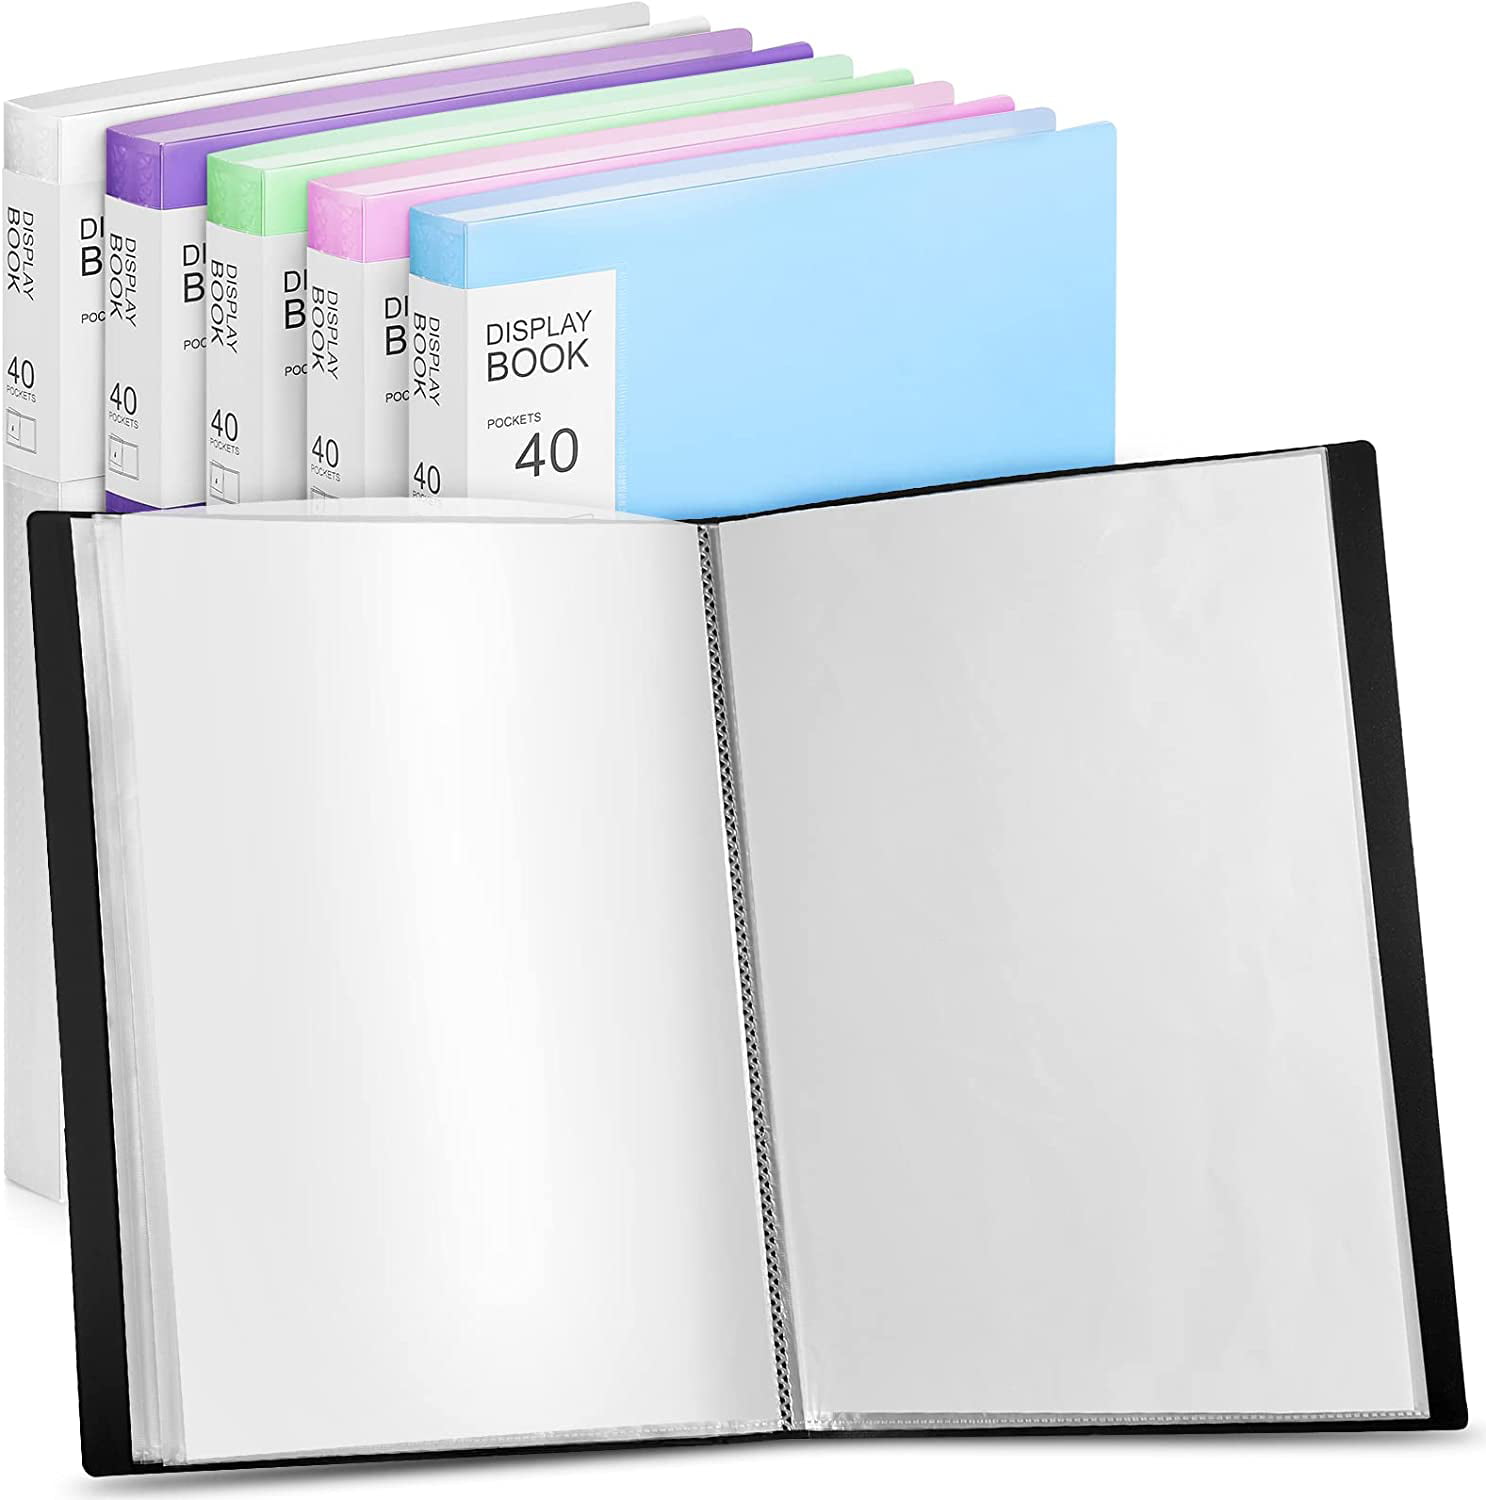 Heavy Duty Art Portfolio Folder with Clear Sheet Protectors Aqua Display 60 Pages Presentation Book for Artwork Document Organizer Binder Sooez 30-Pocket Binder with Plastic Sleeves 8.5x11 